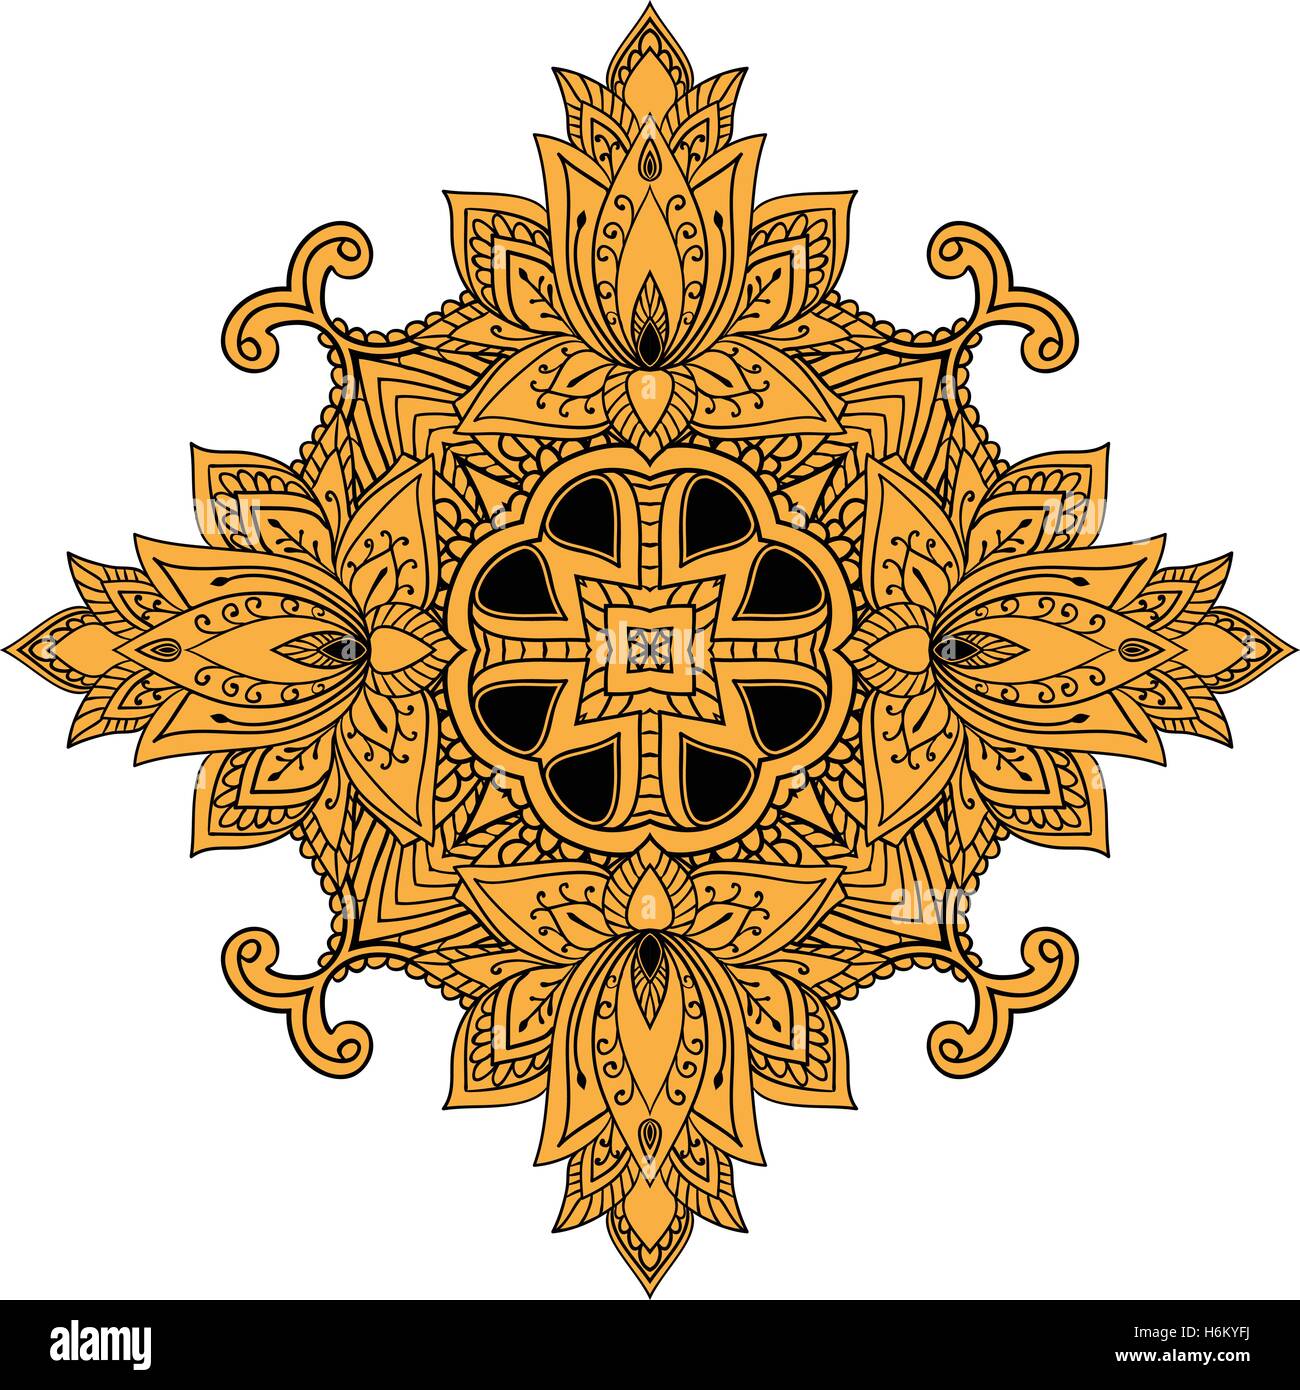 Elegante Ornamente Spitze Mandala. Alte dekorative Ornament-Muster. Handgezeichnete Islam, Arabisch, Indisch, Osmanischen Motiven, Spitze pend Stock Vektor